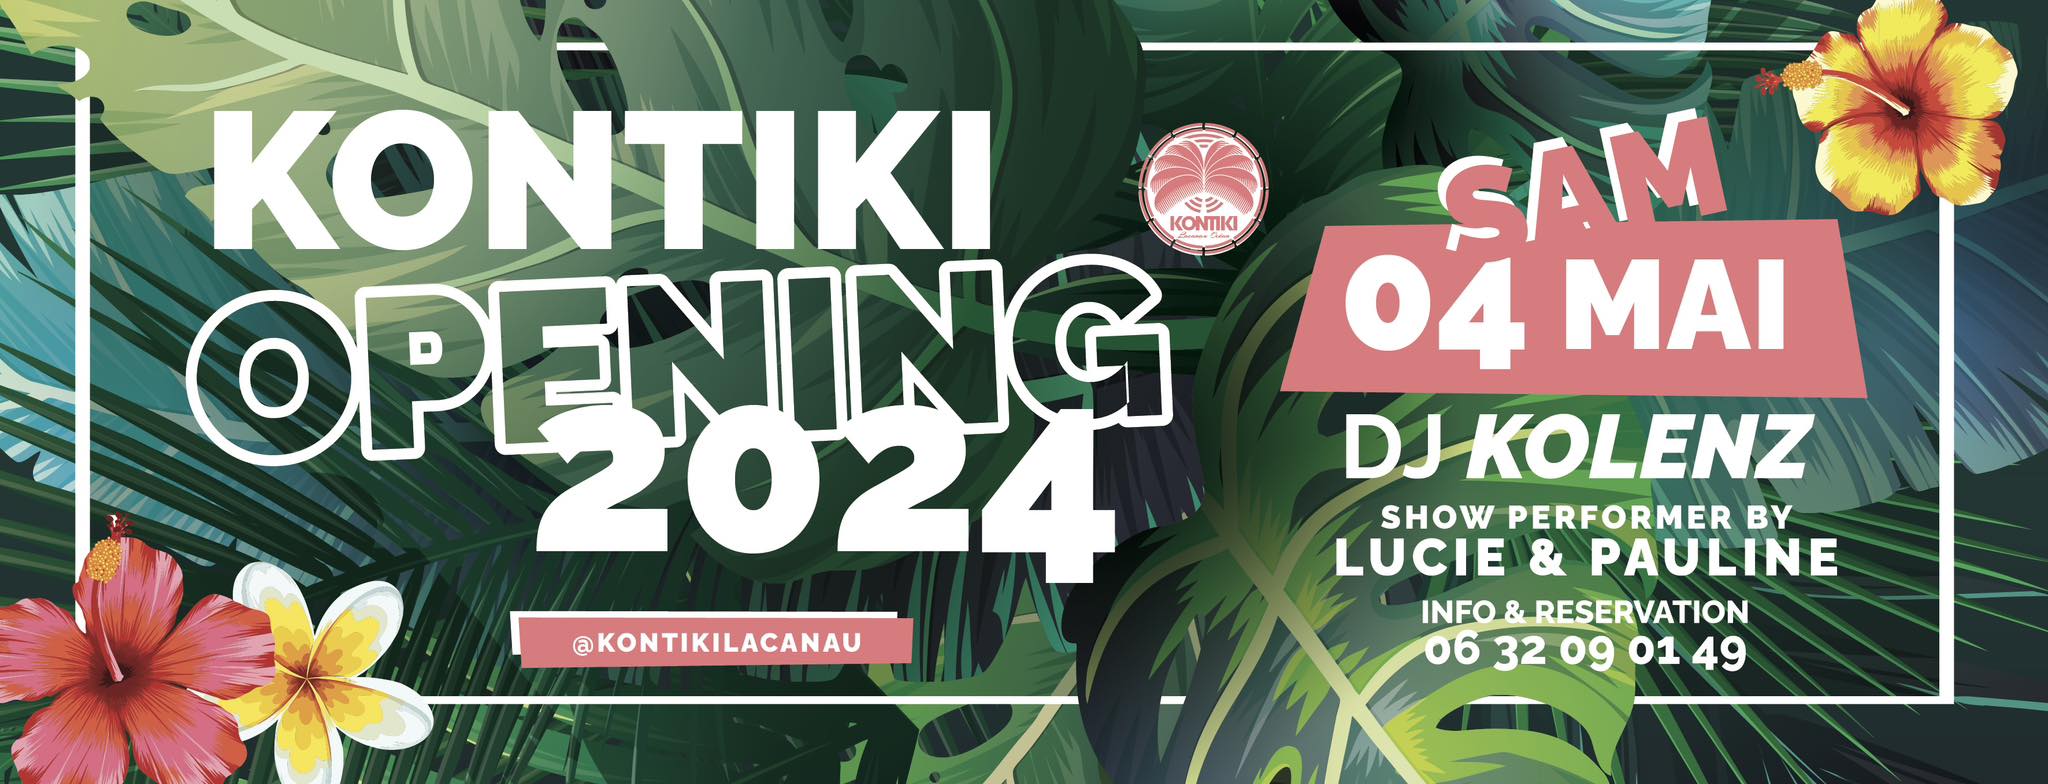 Kontiki Opening 2024 sur réservation